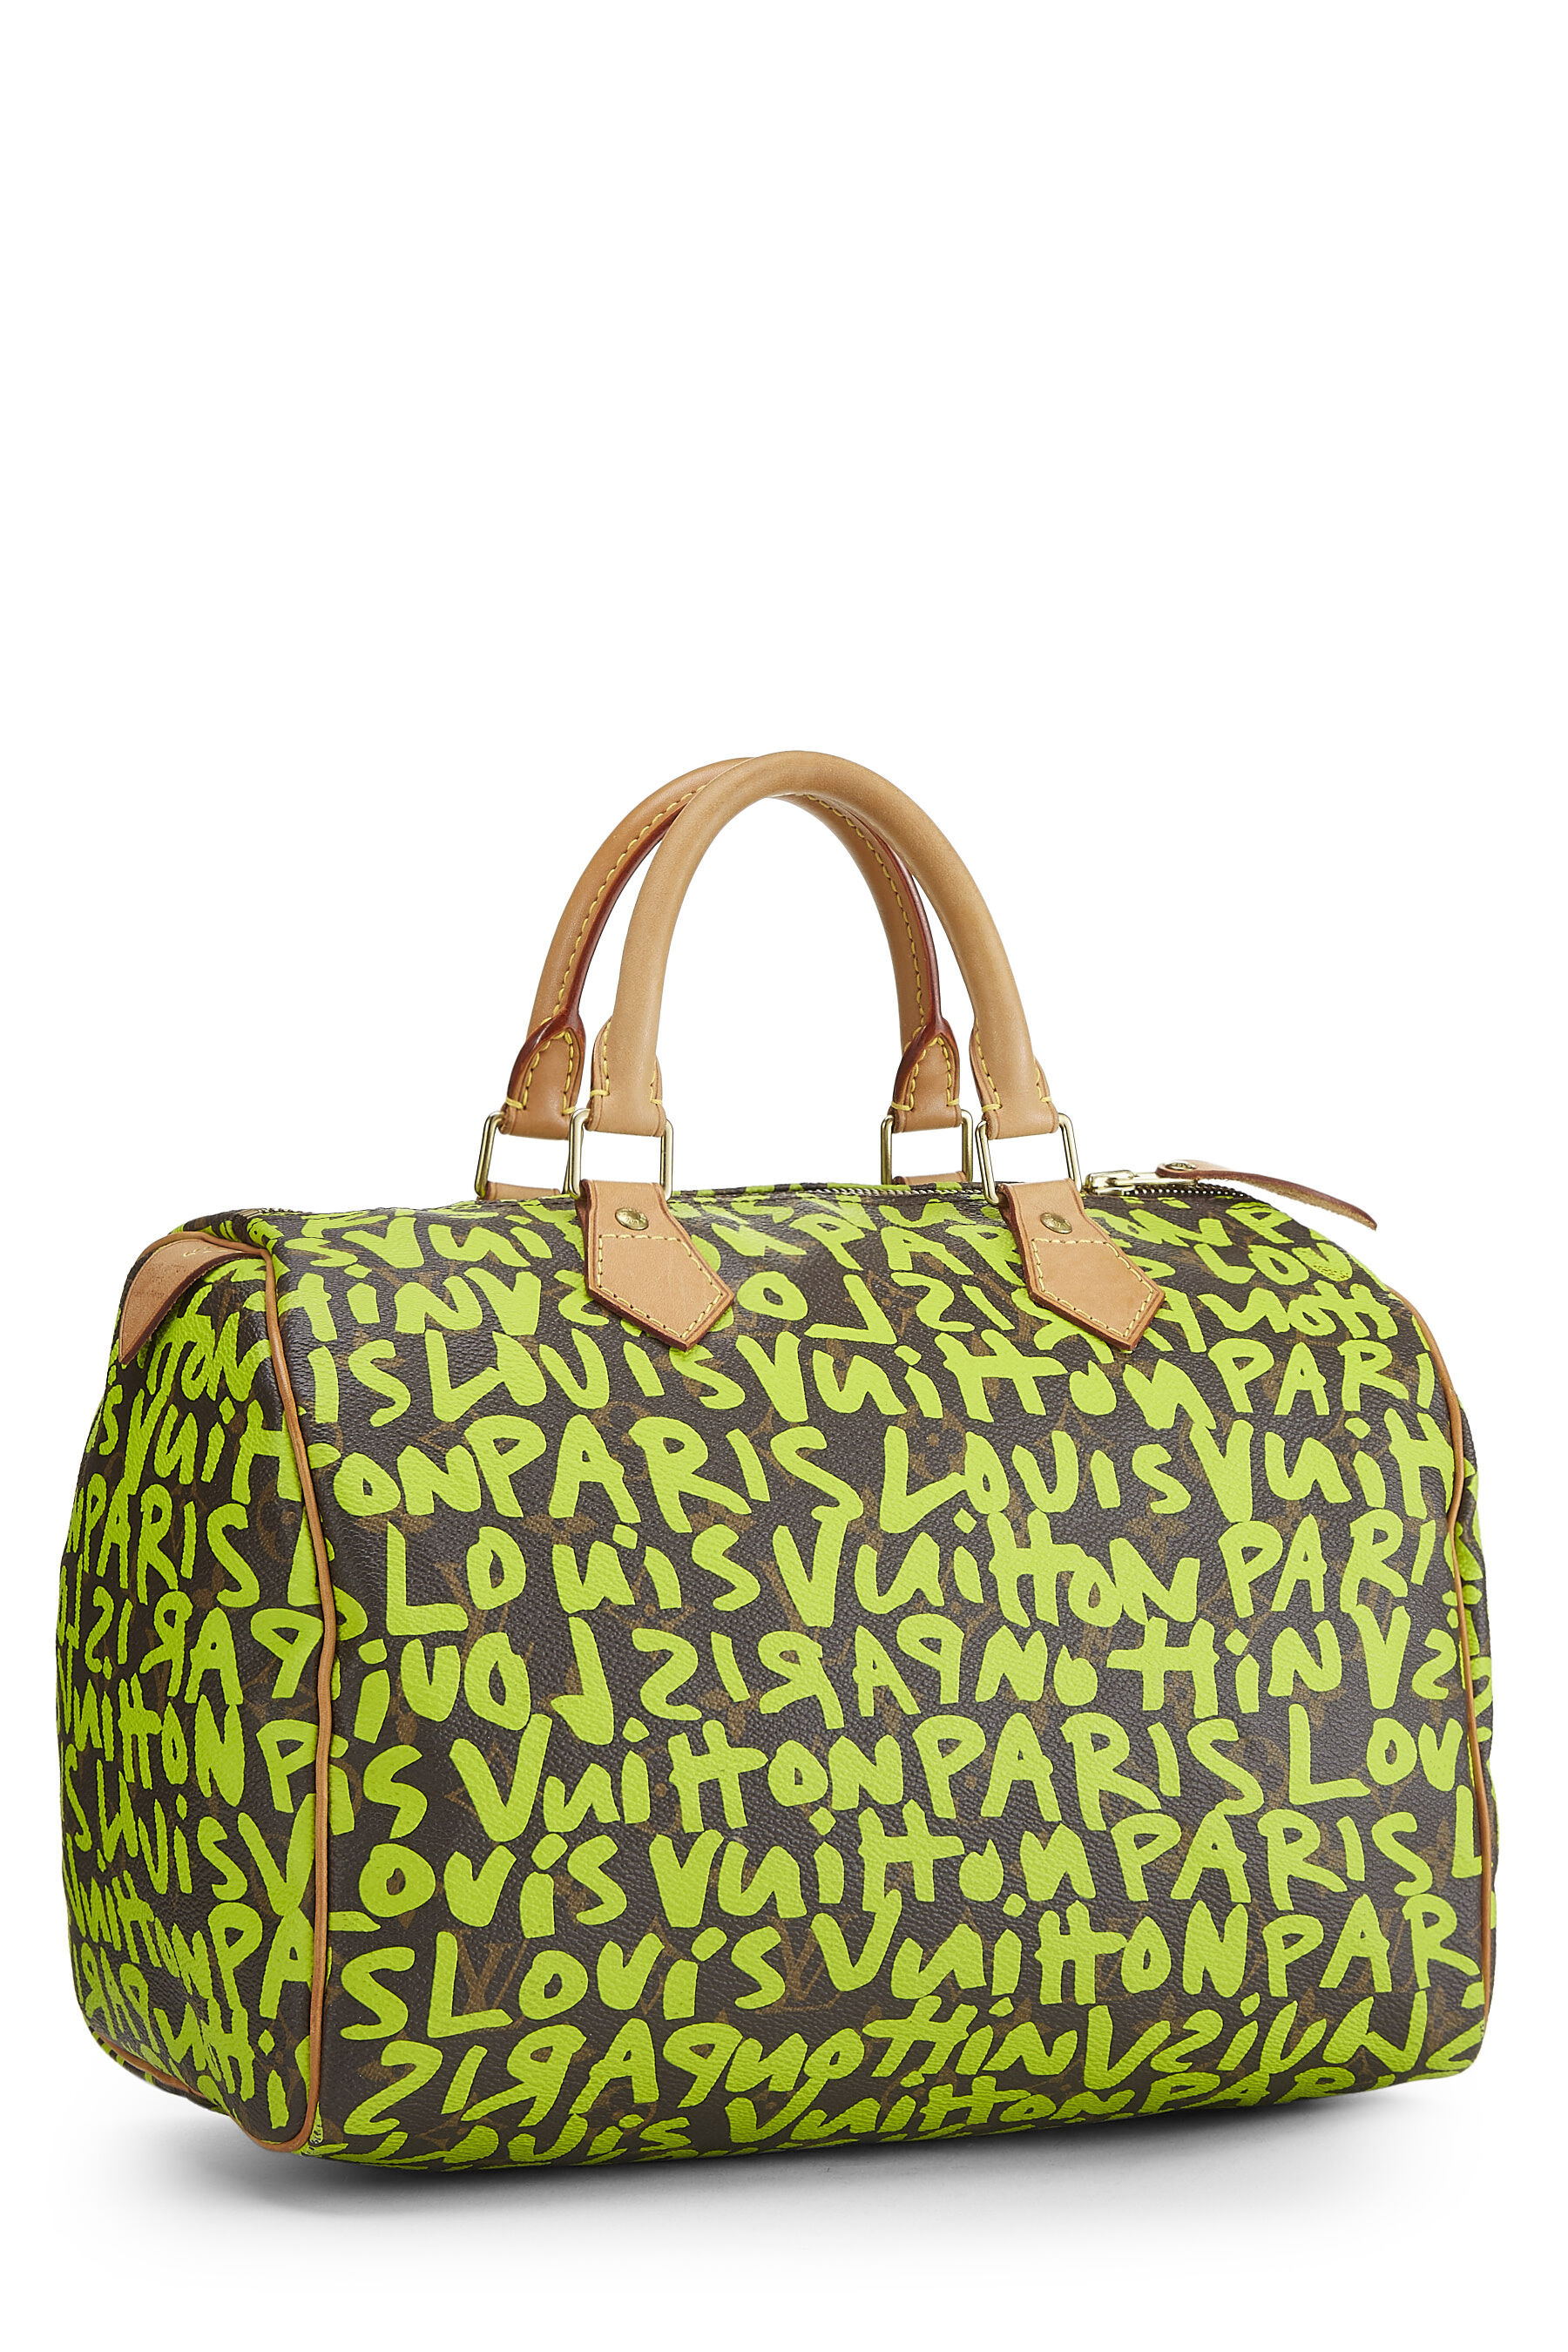 Louis Vuitton Stephen Sprouse Speedy 30 Graffiti Handbag in Box